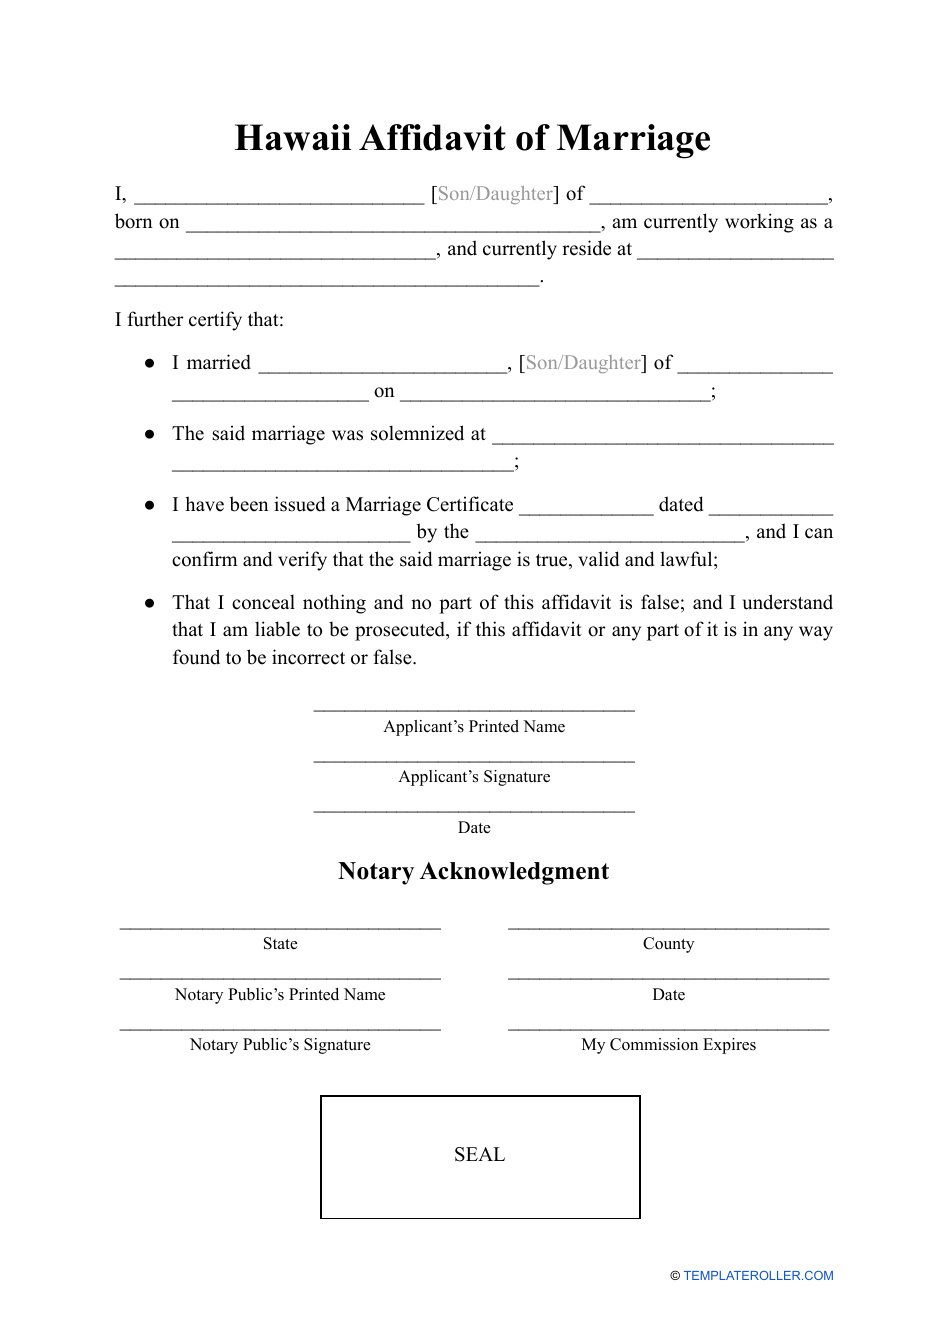 Affidavit of Marriage - Hawaii, Page 1